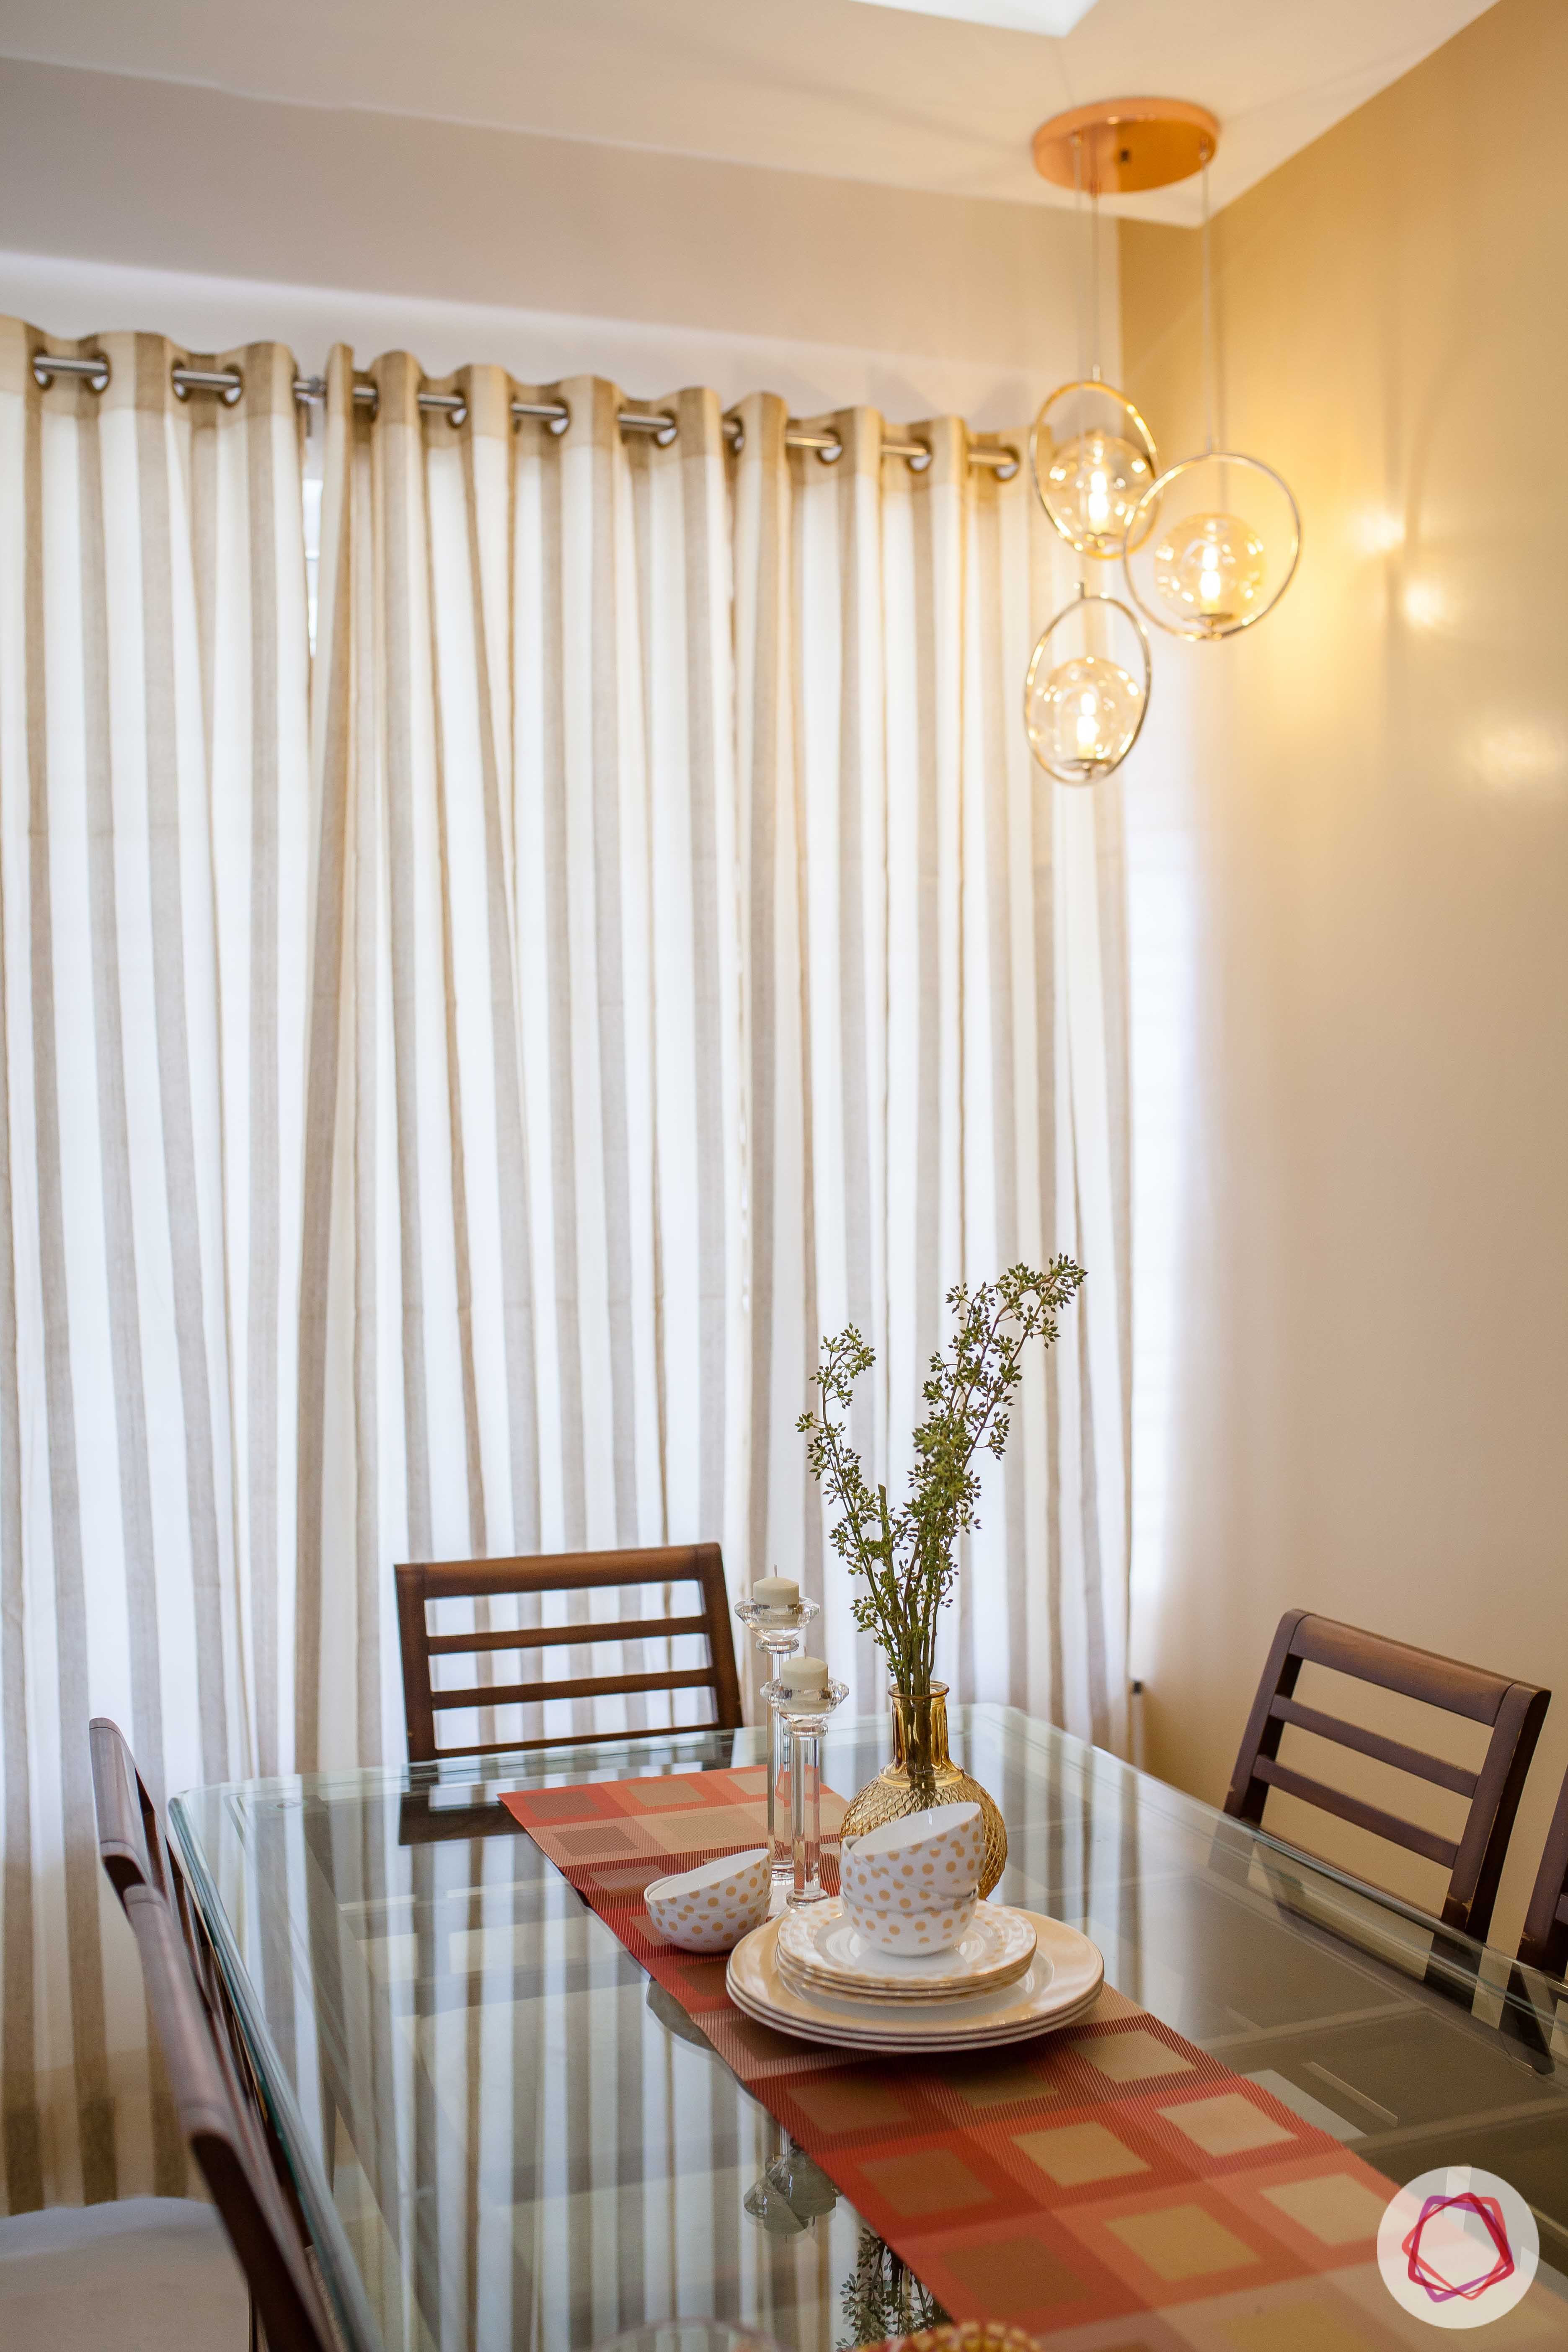 kunal-aspiree-dining-room-corner-lights-glass-top-table